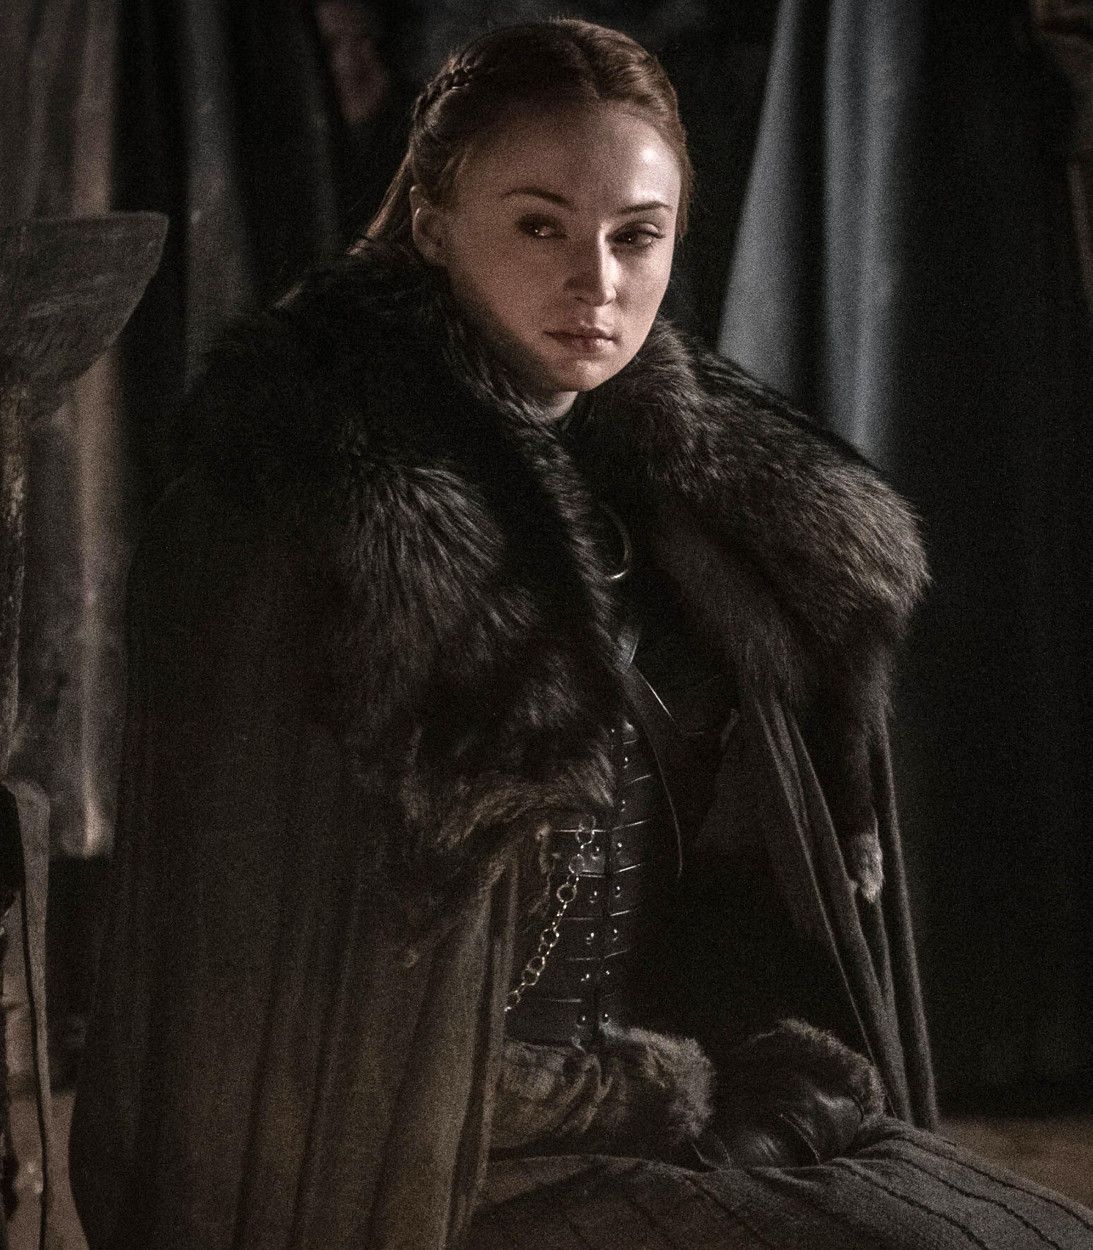 Sophie Turner As Sansa Stark In Game Of Thrones Season 8 Episode 3